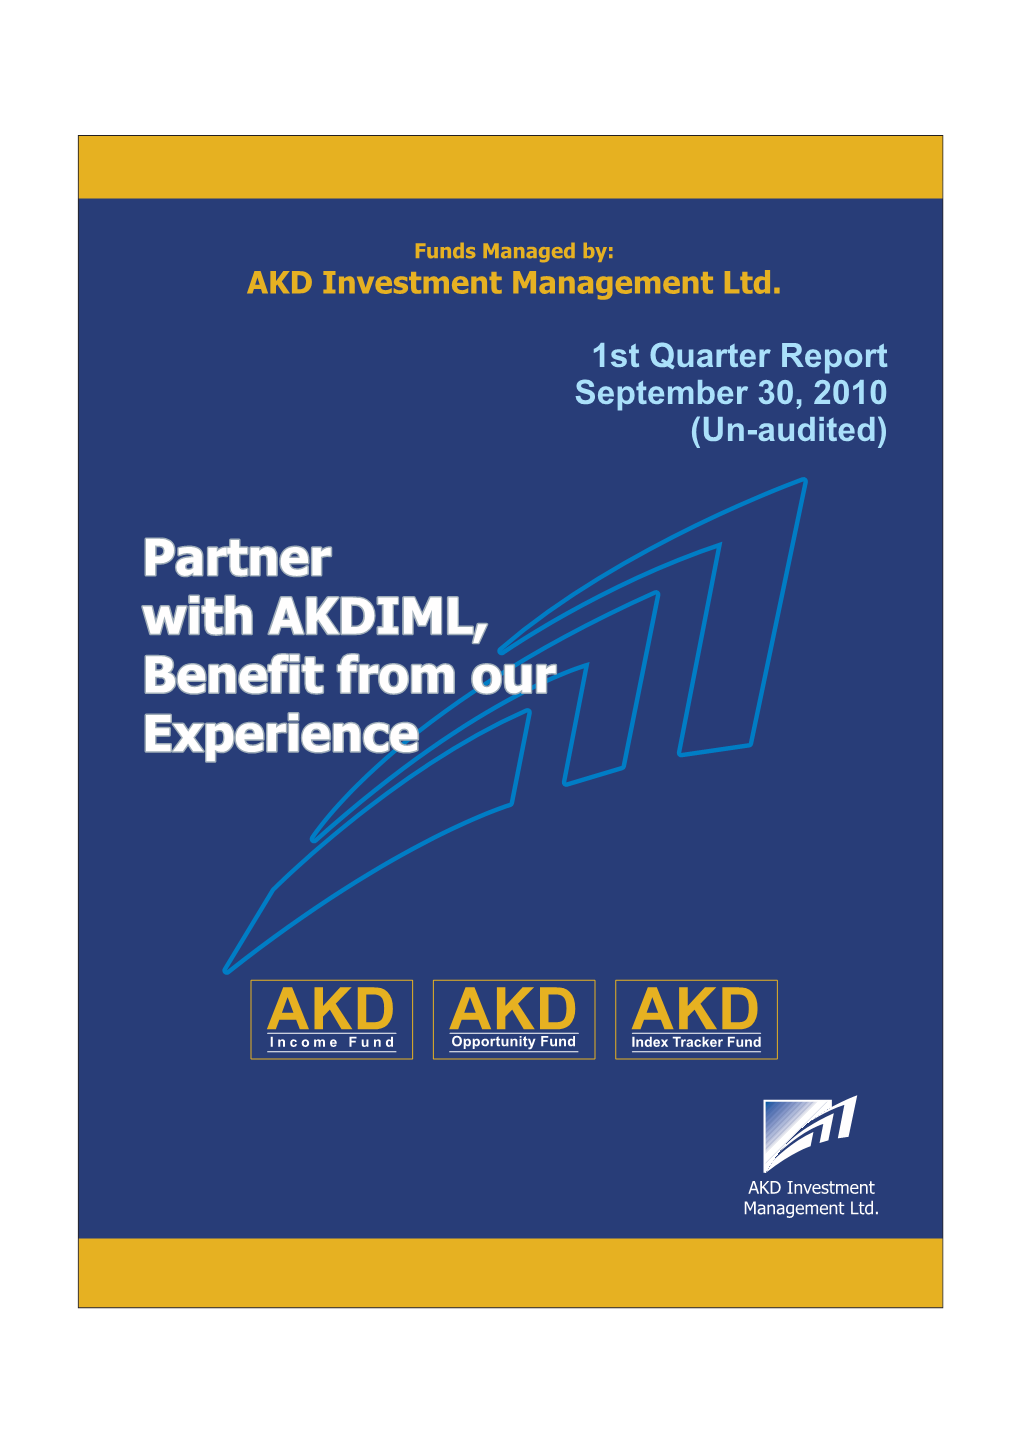 AKD Investment Management Ltd